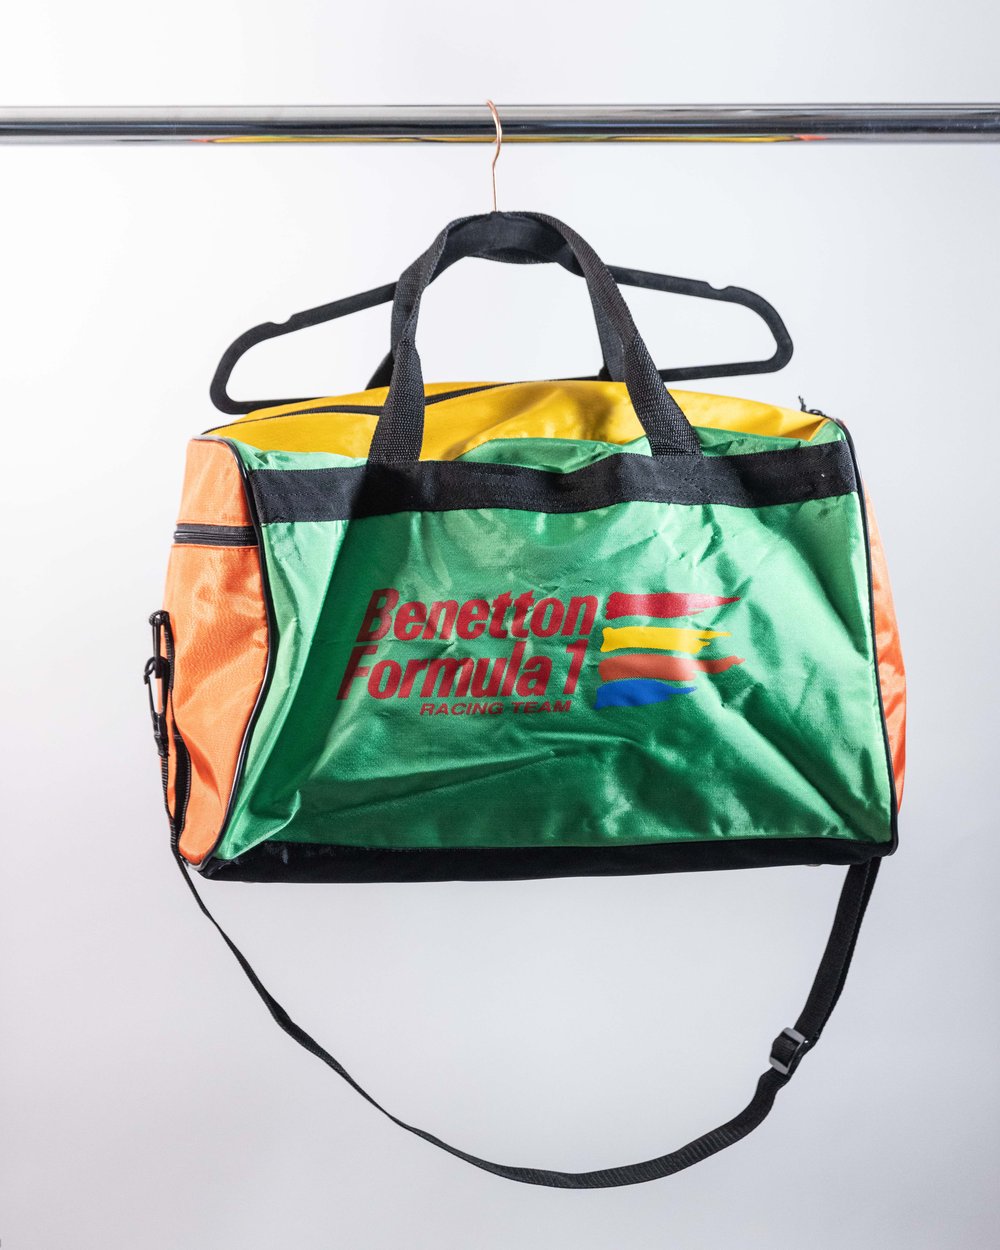 Benetton Duffle Bag | Checkpoint Japan